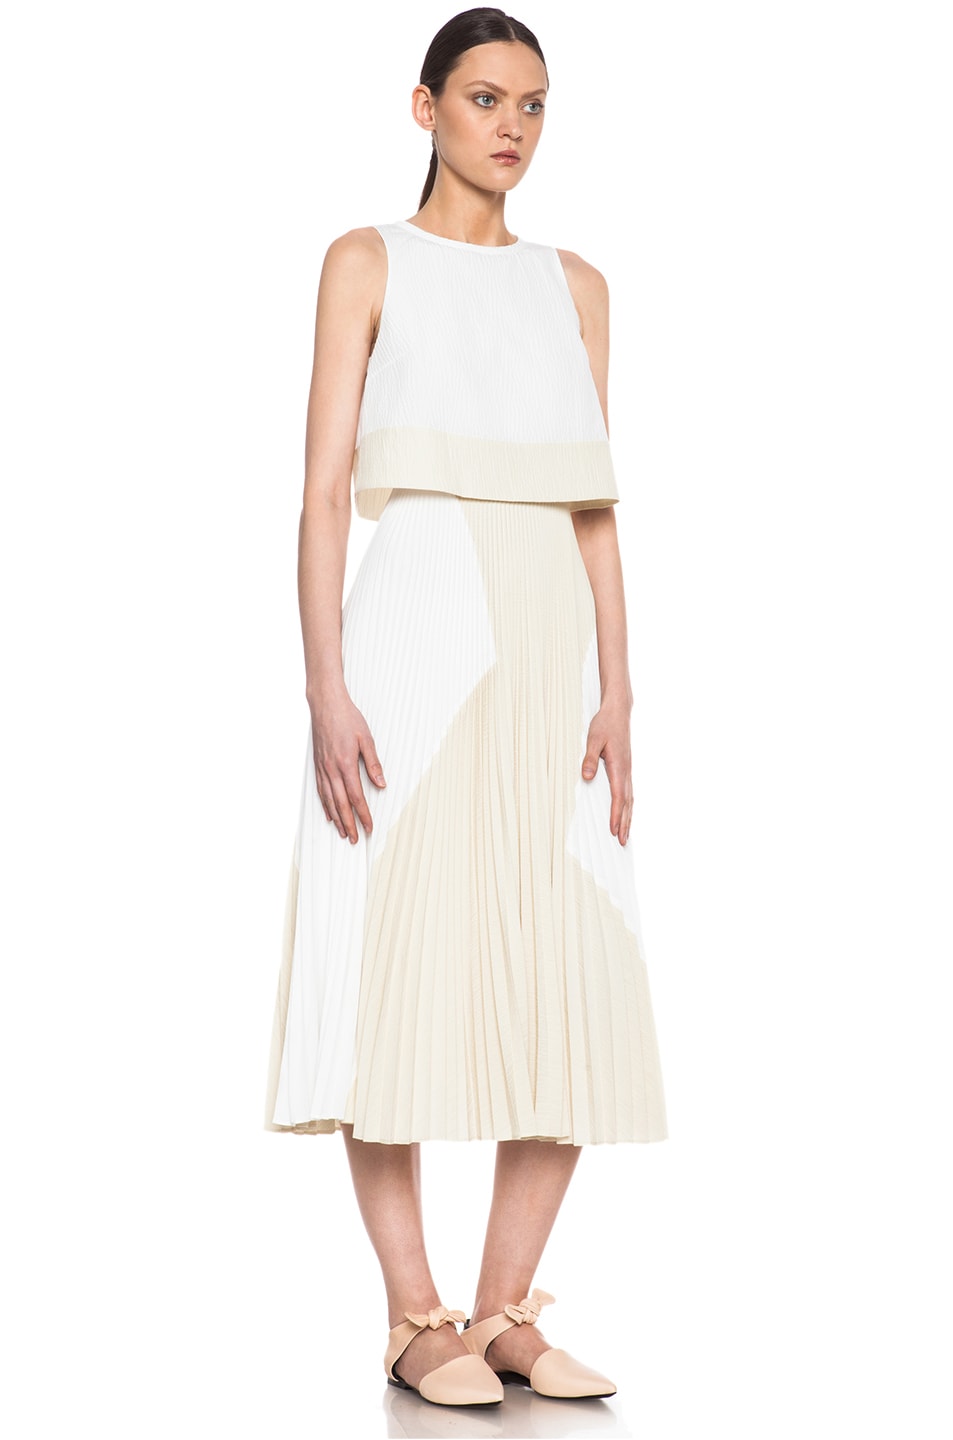 Proenza Schouler Pleated Poly Skirt Dress in White & Ecru | FWRD